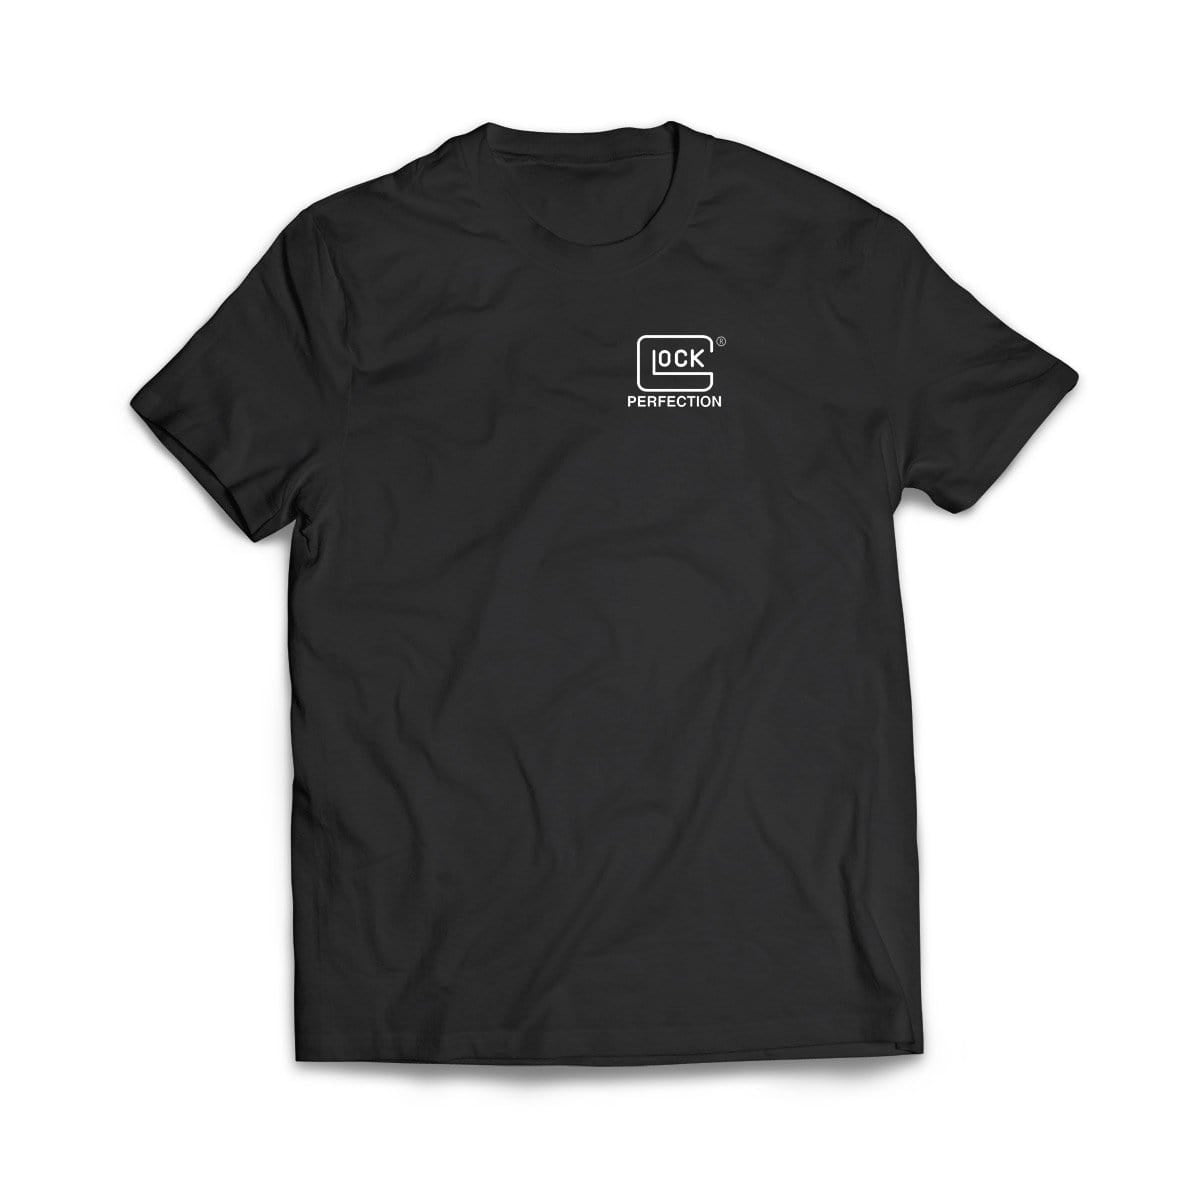 Glock Perfection Black T-Shirt - We Got Teez